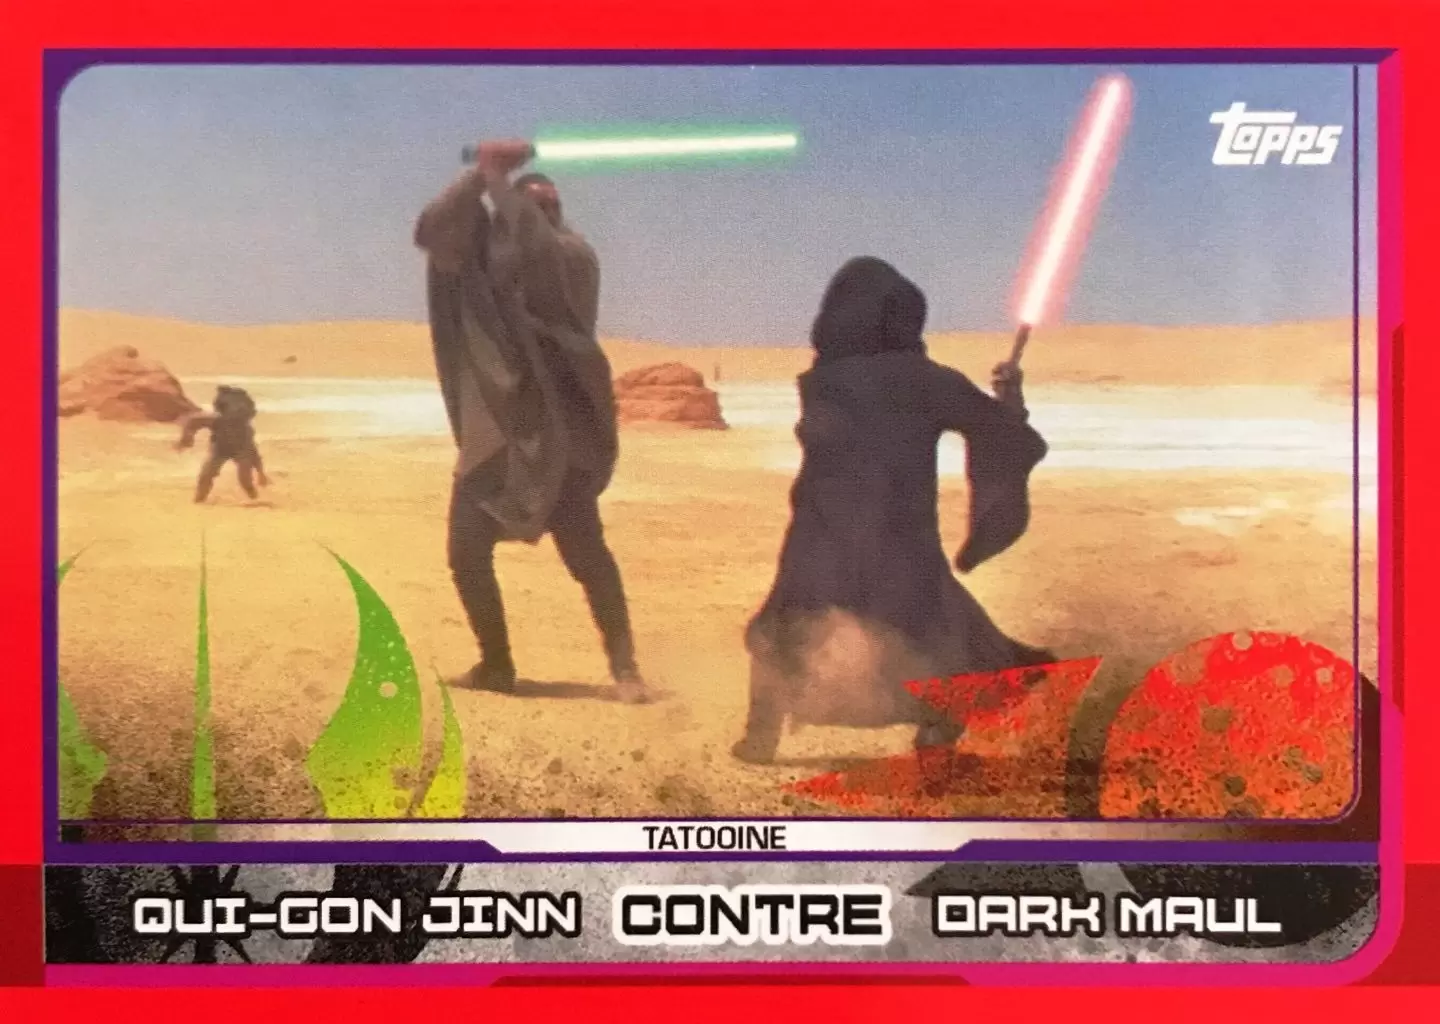 Topps - Voyage vers Star wars : Les Derniers Jedi - Qui-Gon Jinn contre Dark Maul (Tatooine)